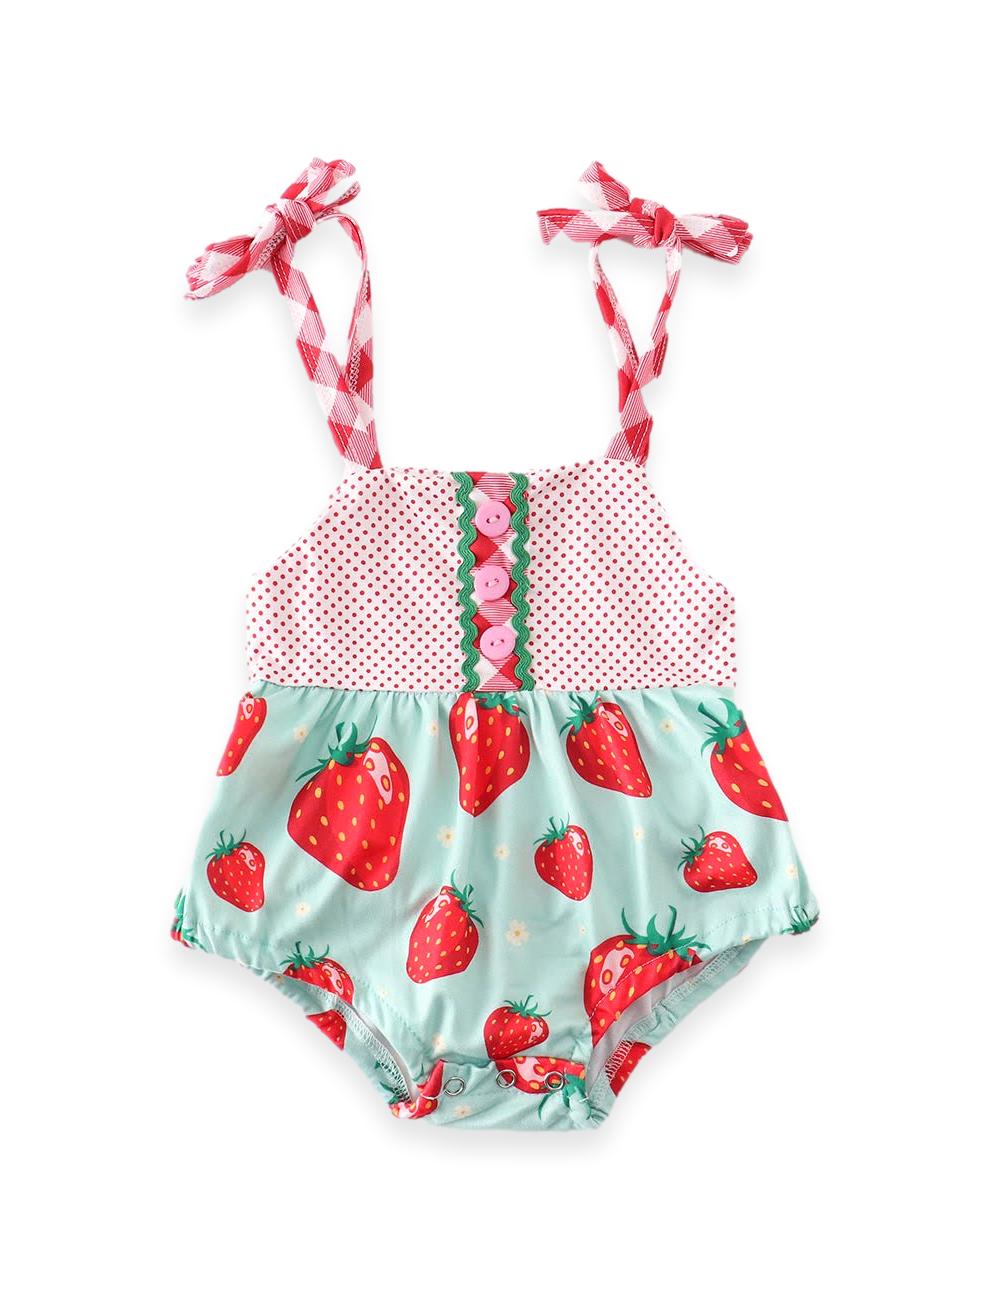 Gingham Plaid Polka Dot Strawberry Baby Bubble Romper - ARIA KIDS